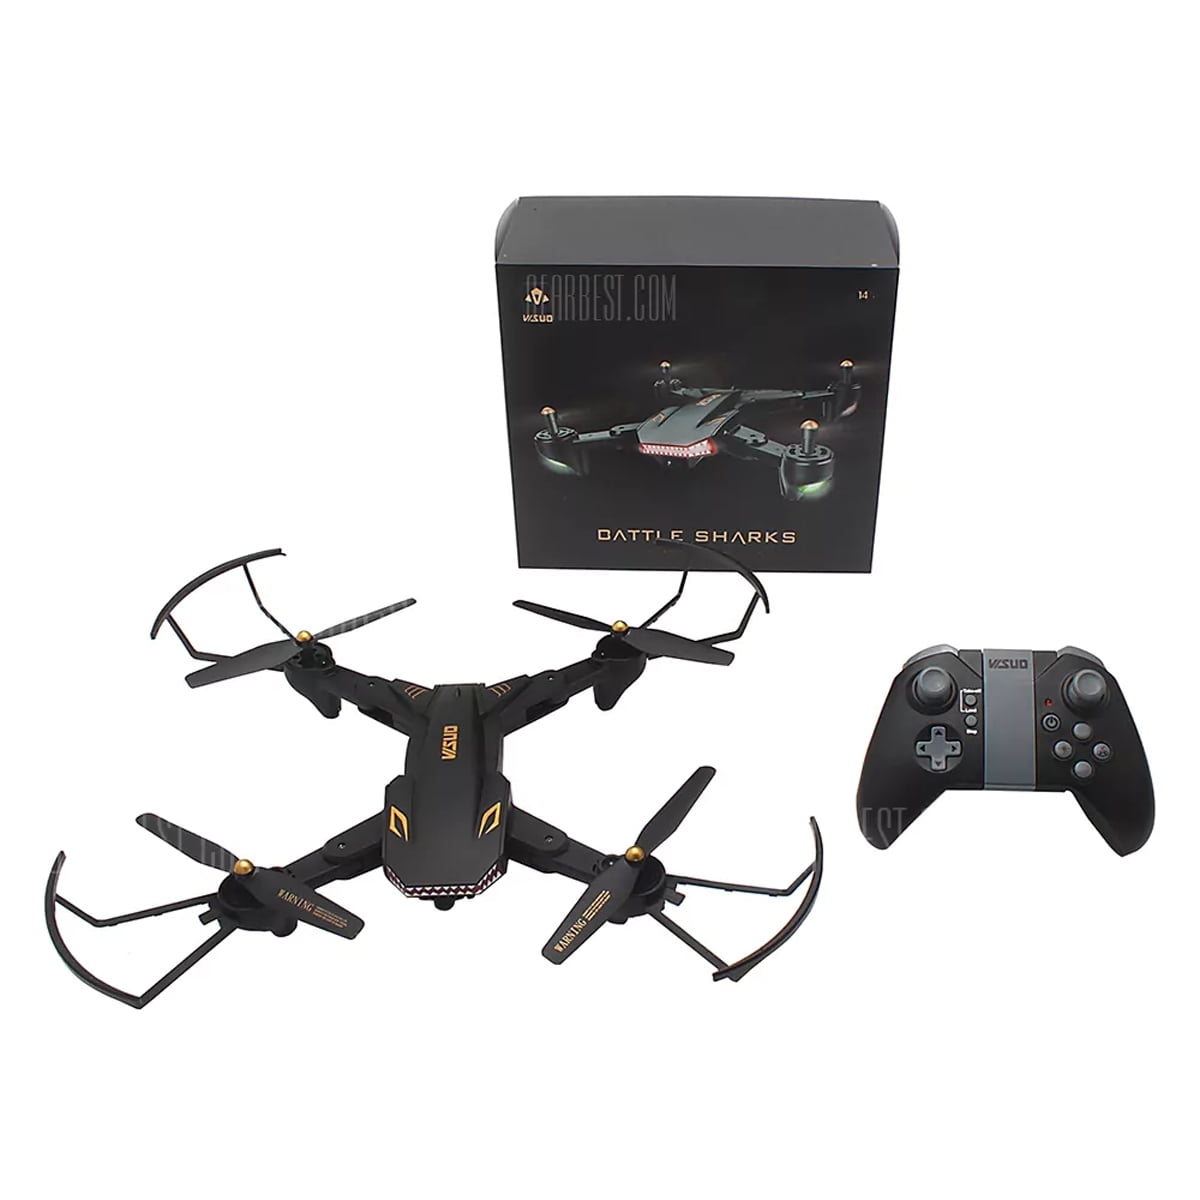 tianqu visuo xs809s wifi fpv camera rc drone quadcopter